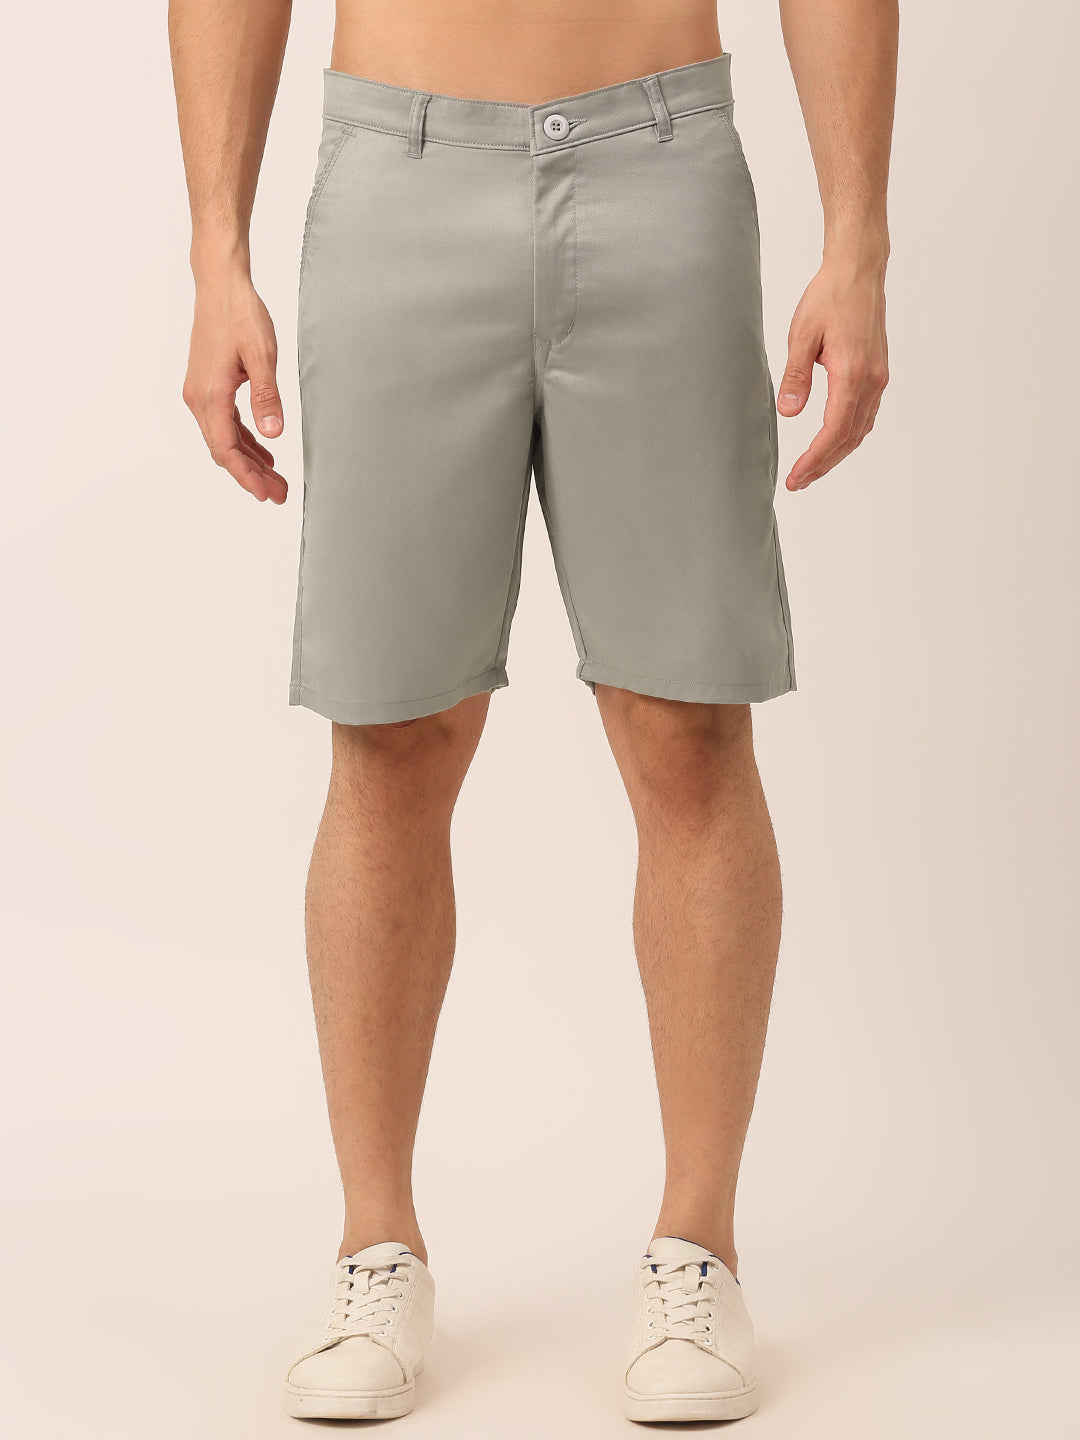 Men's Casual Cotton Solid Shorts ( SGP 153 Light-Grey ) - Jainish